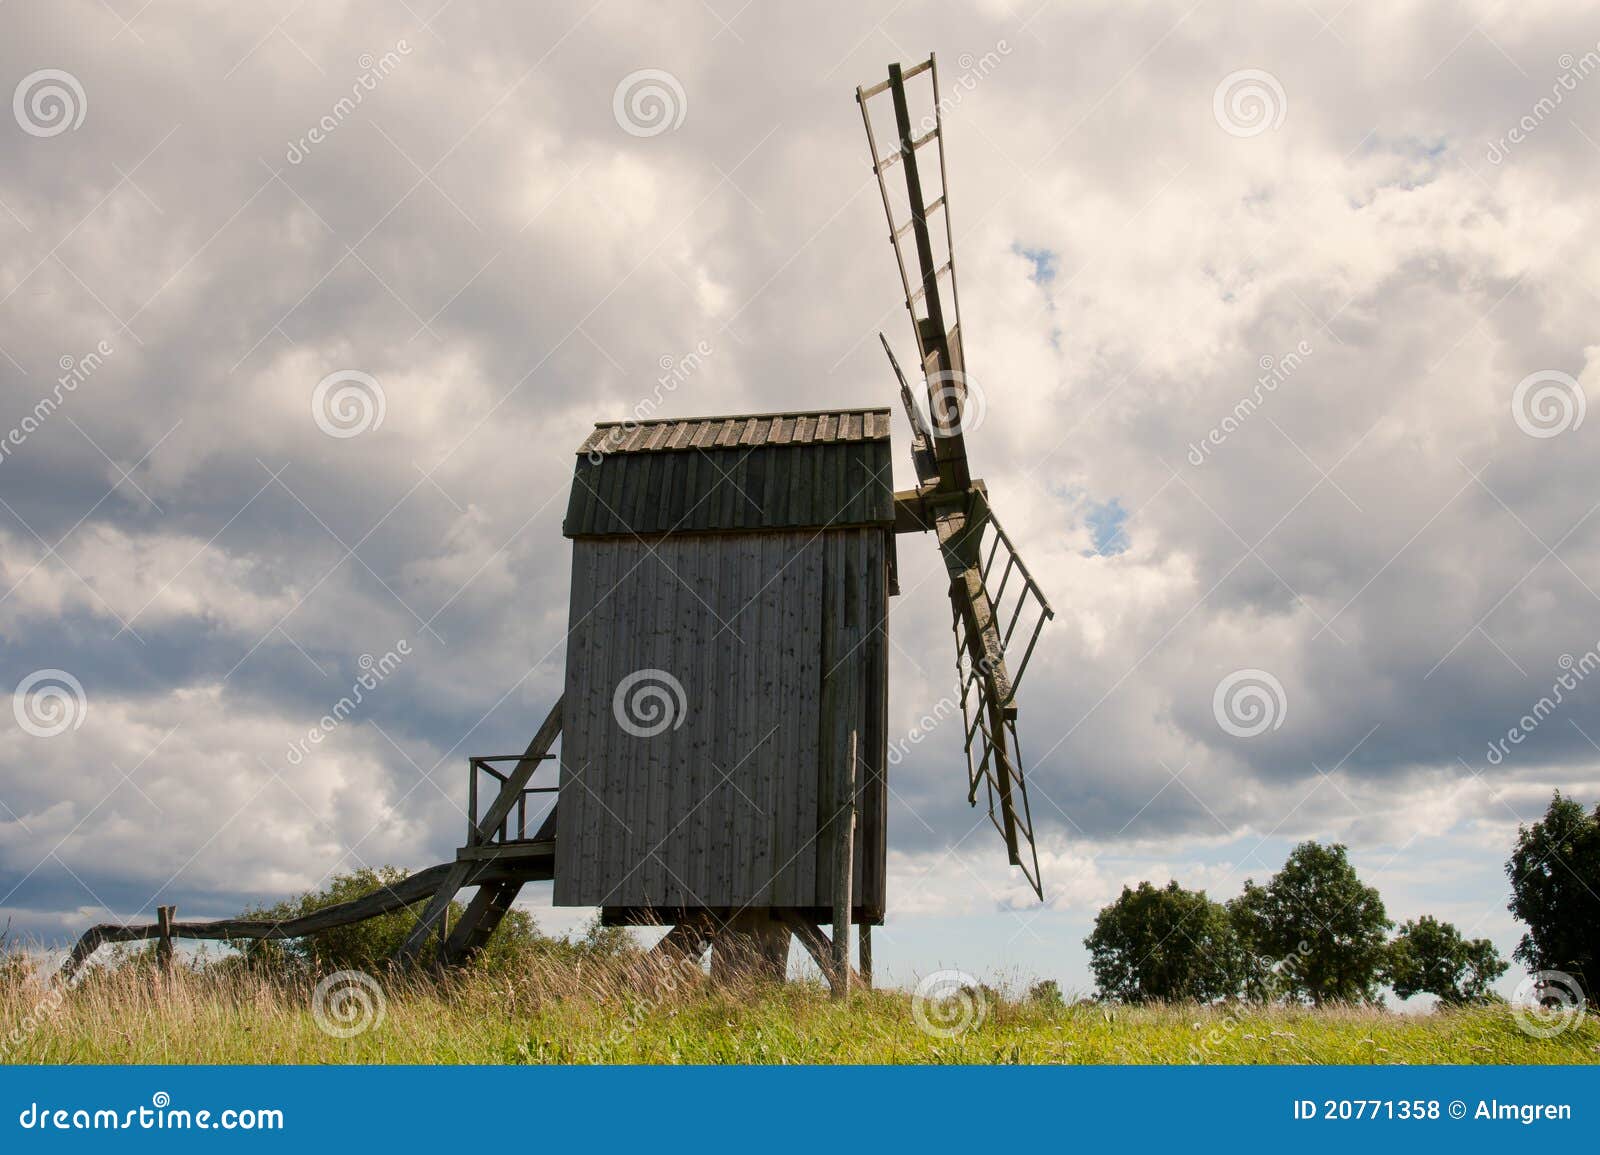 Old Wooden Windmills